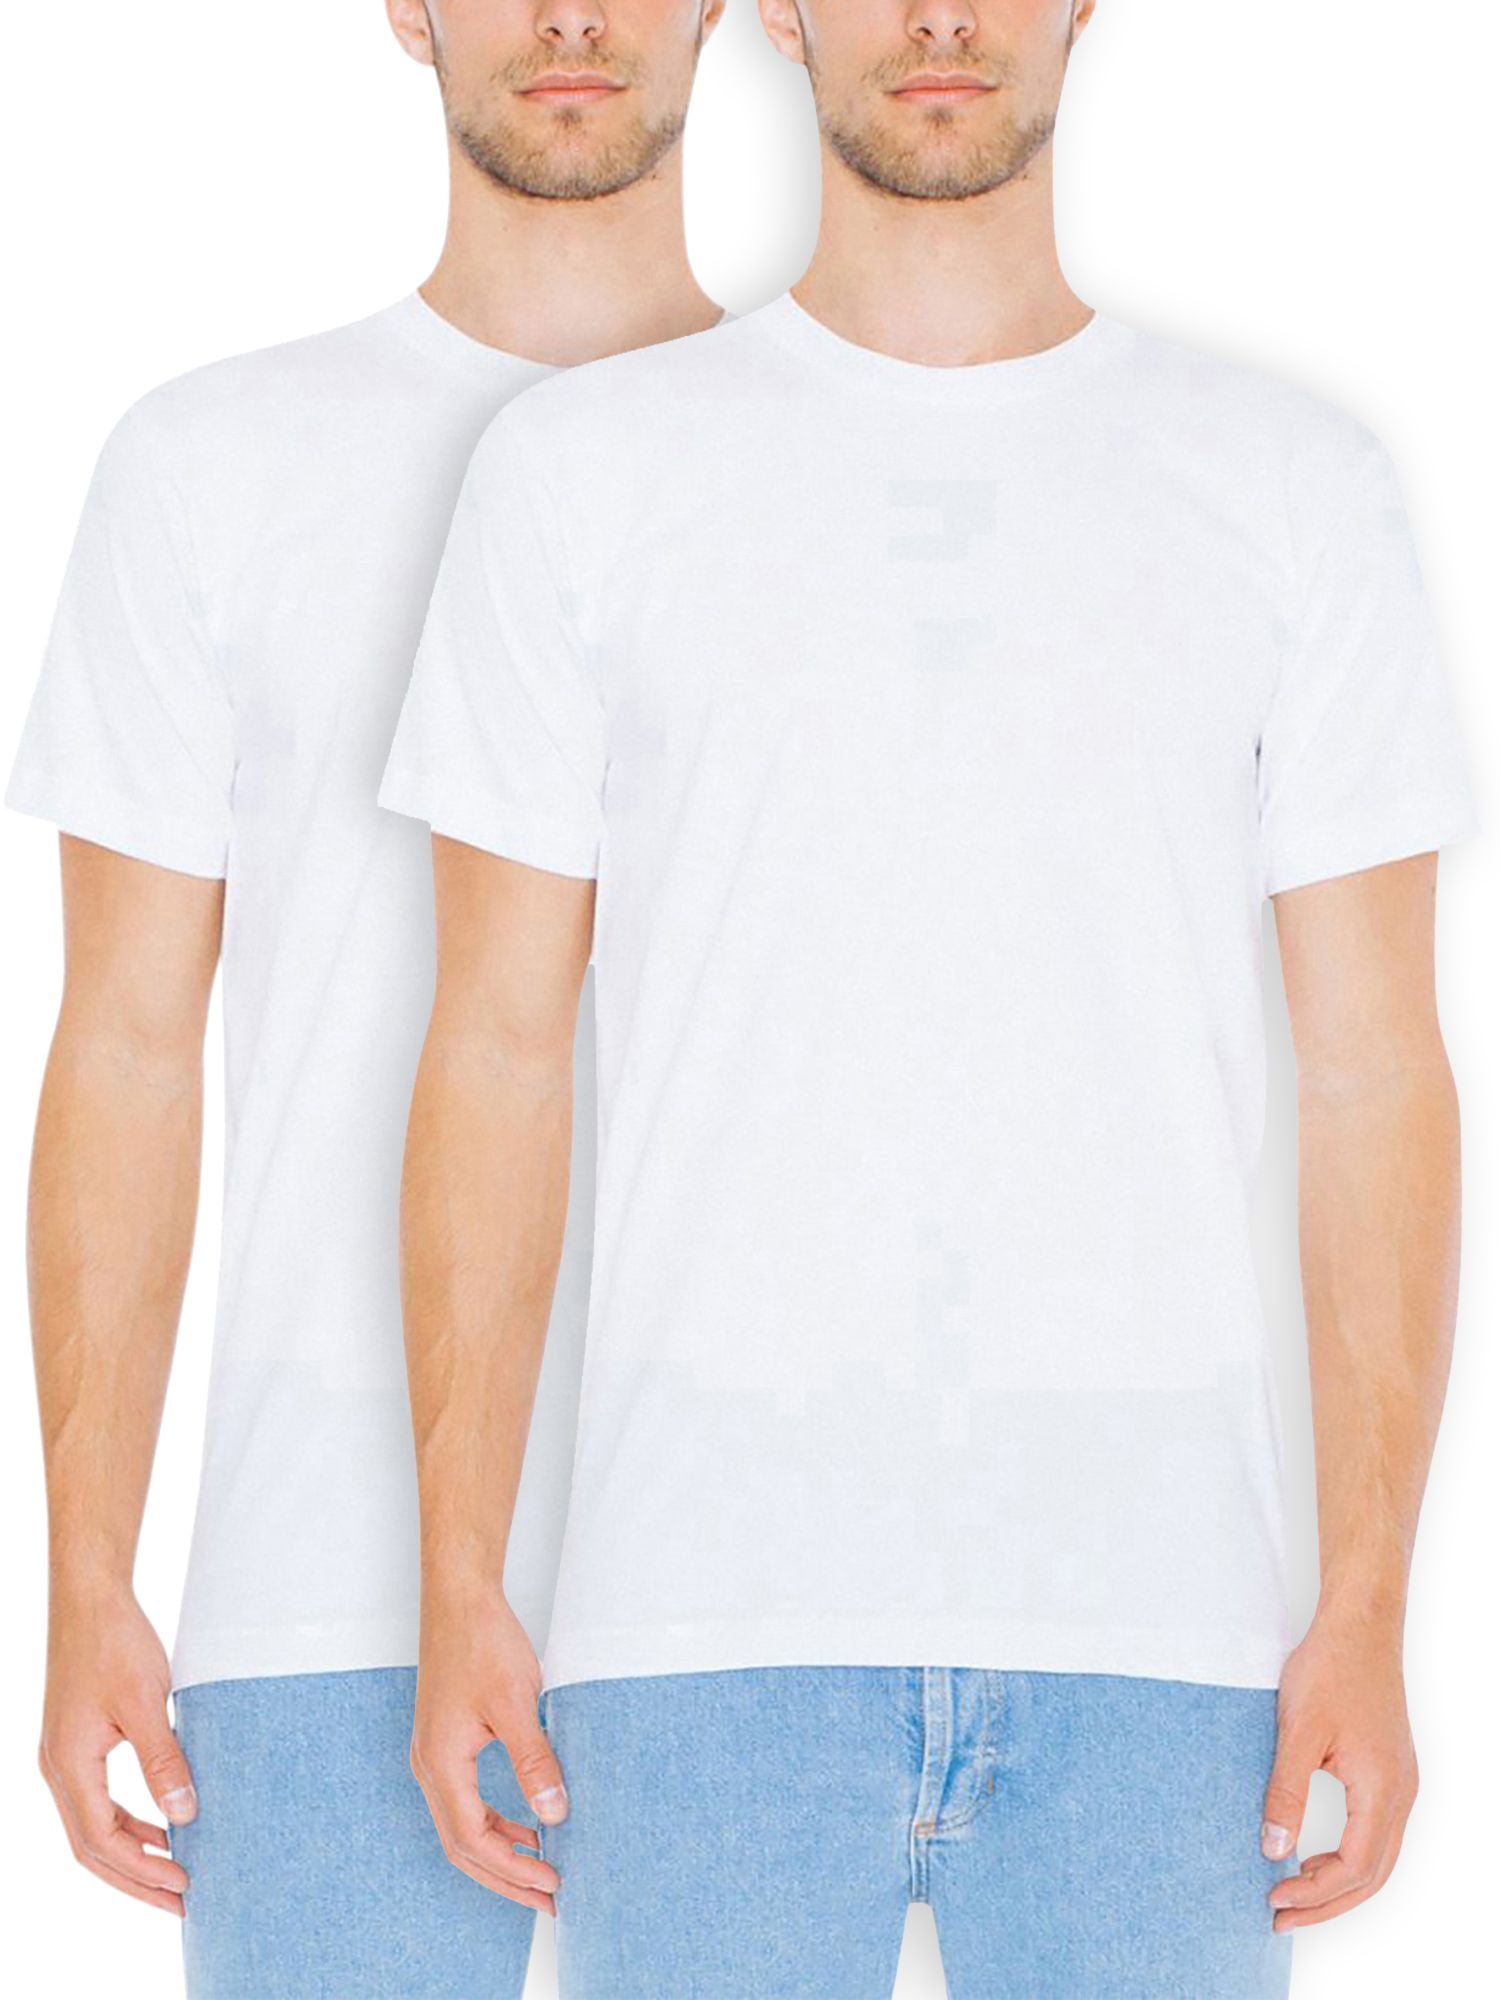 American Apparel unisex-adult Fine Jersey Crewneck Short Sleeve T-Shirt 2-Pack